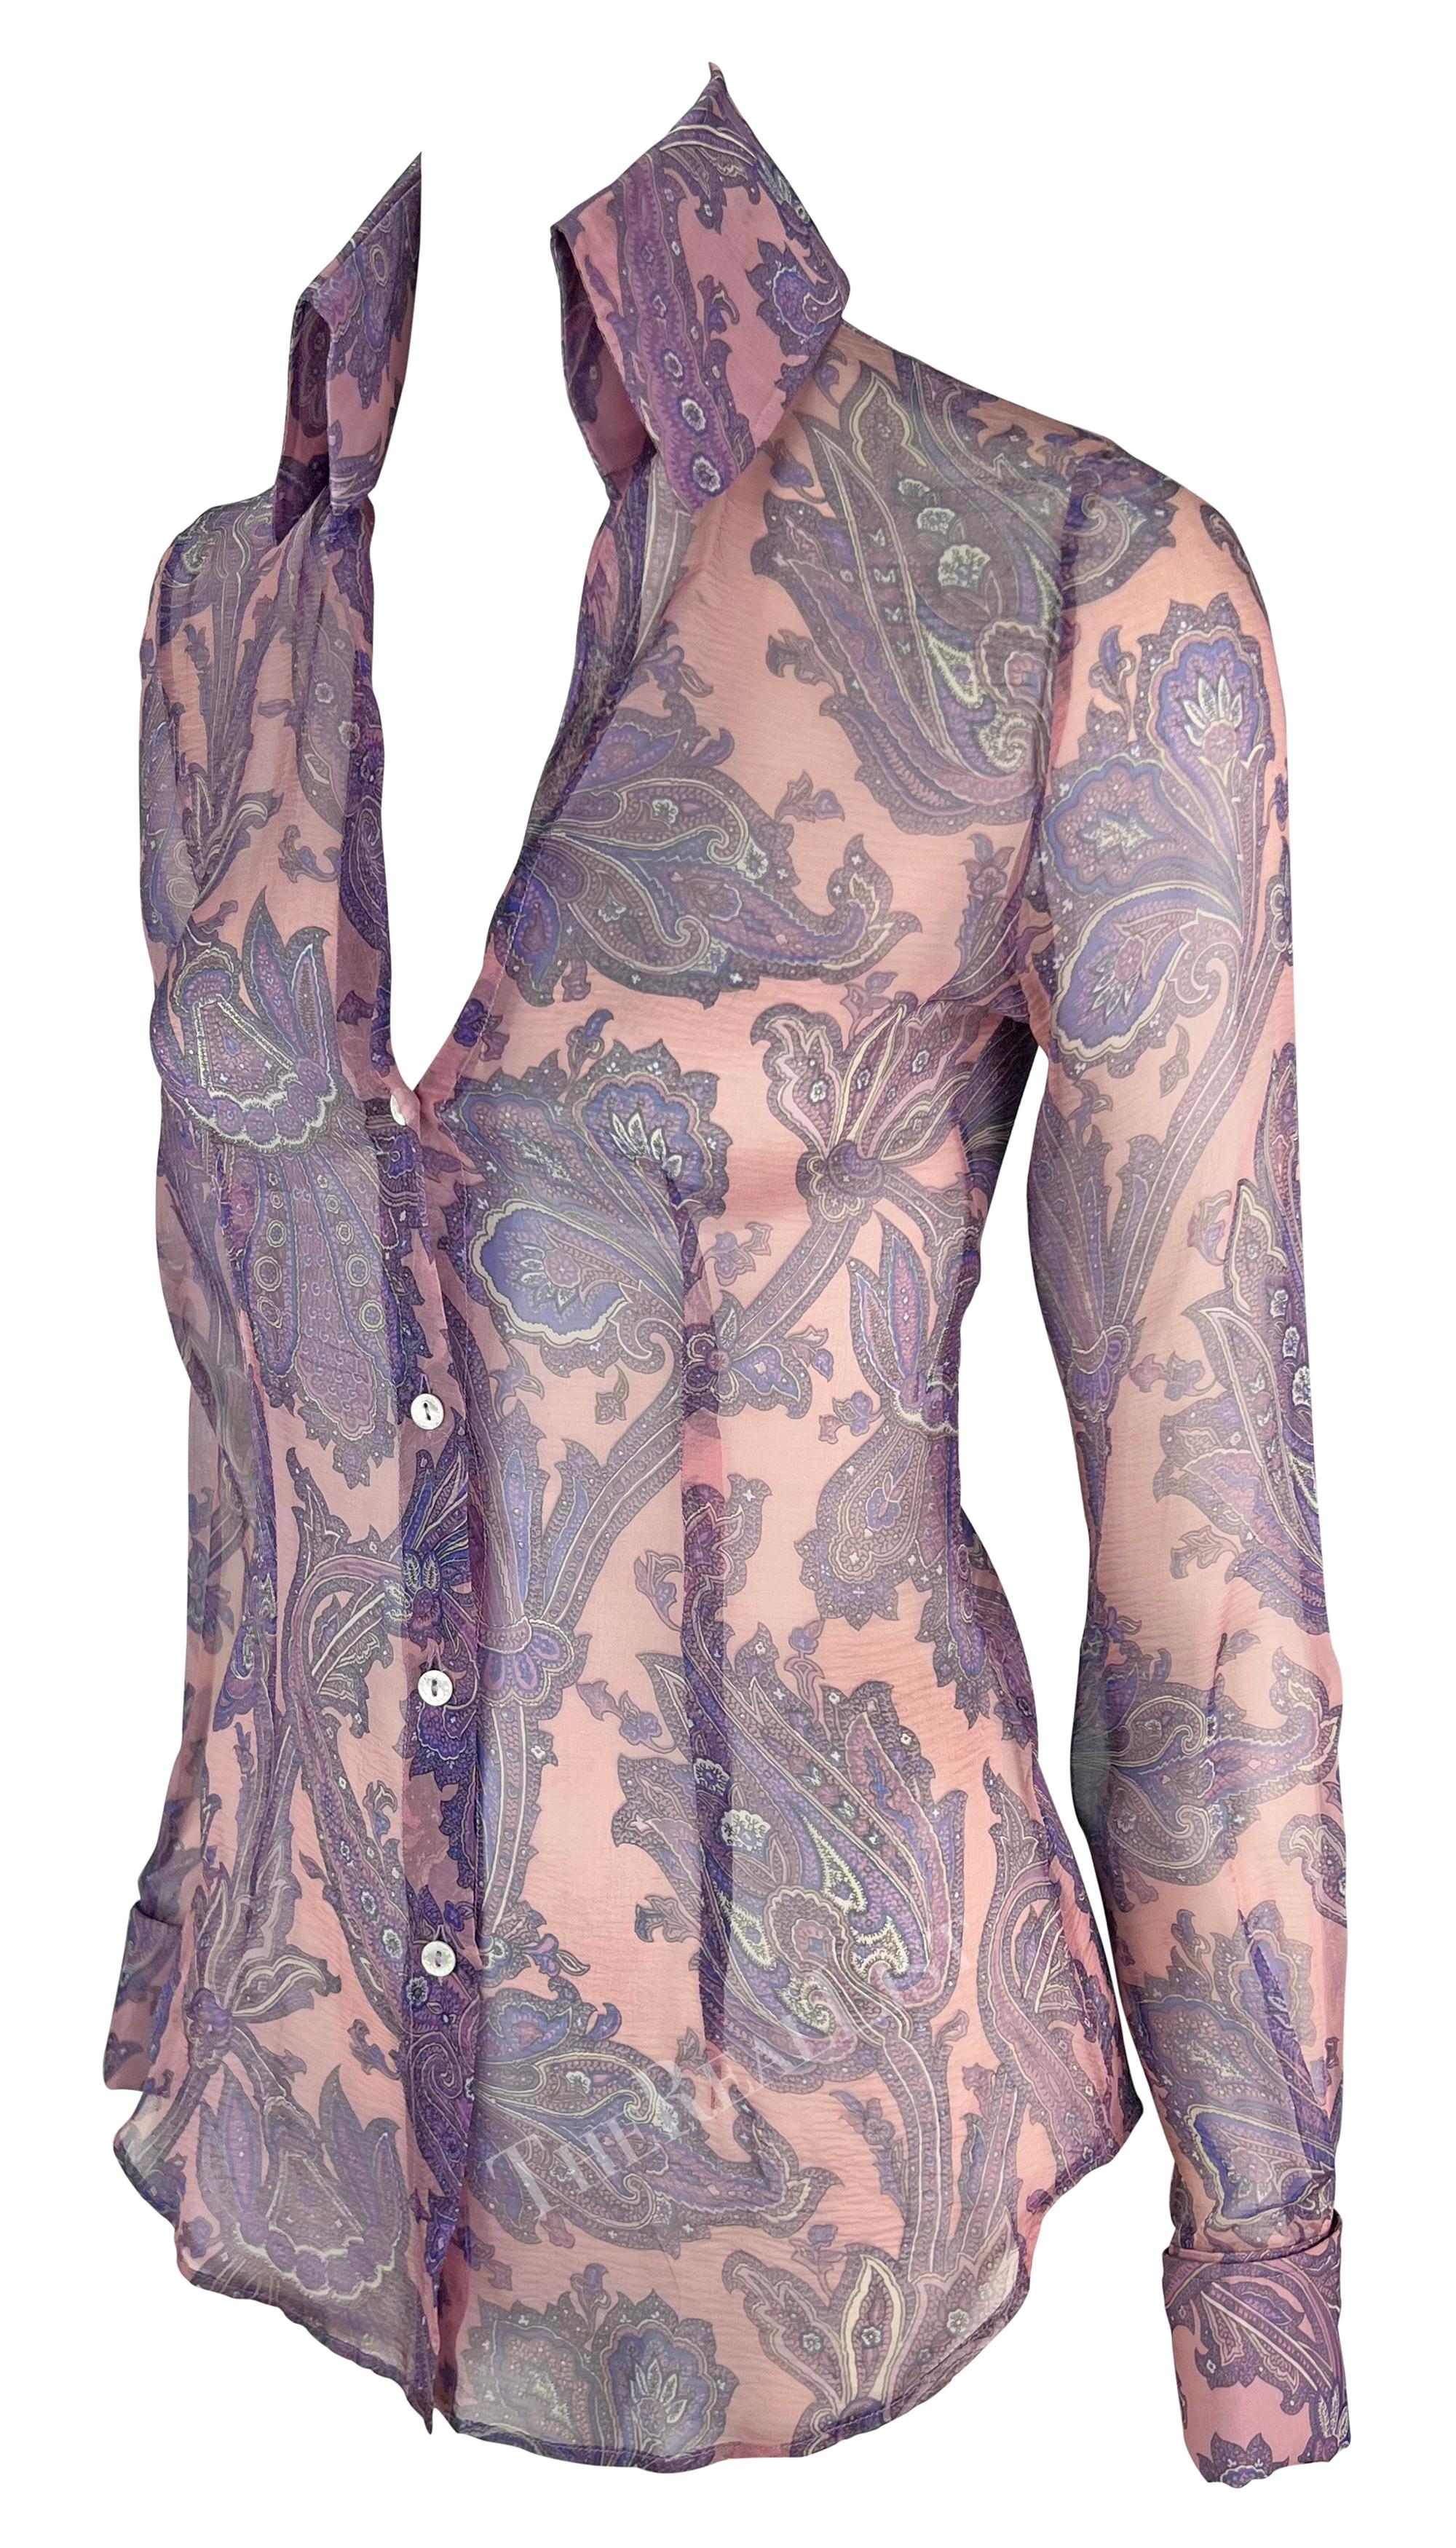 Women's S/S 2000 Dolce & Gabbana Purple Sheer Paisley Runway Button Rhinestone Cuff Top For Sale